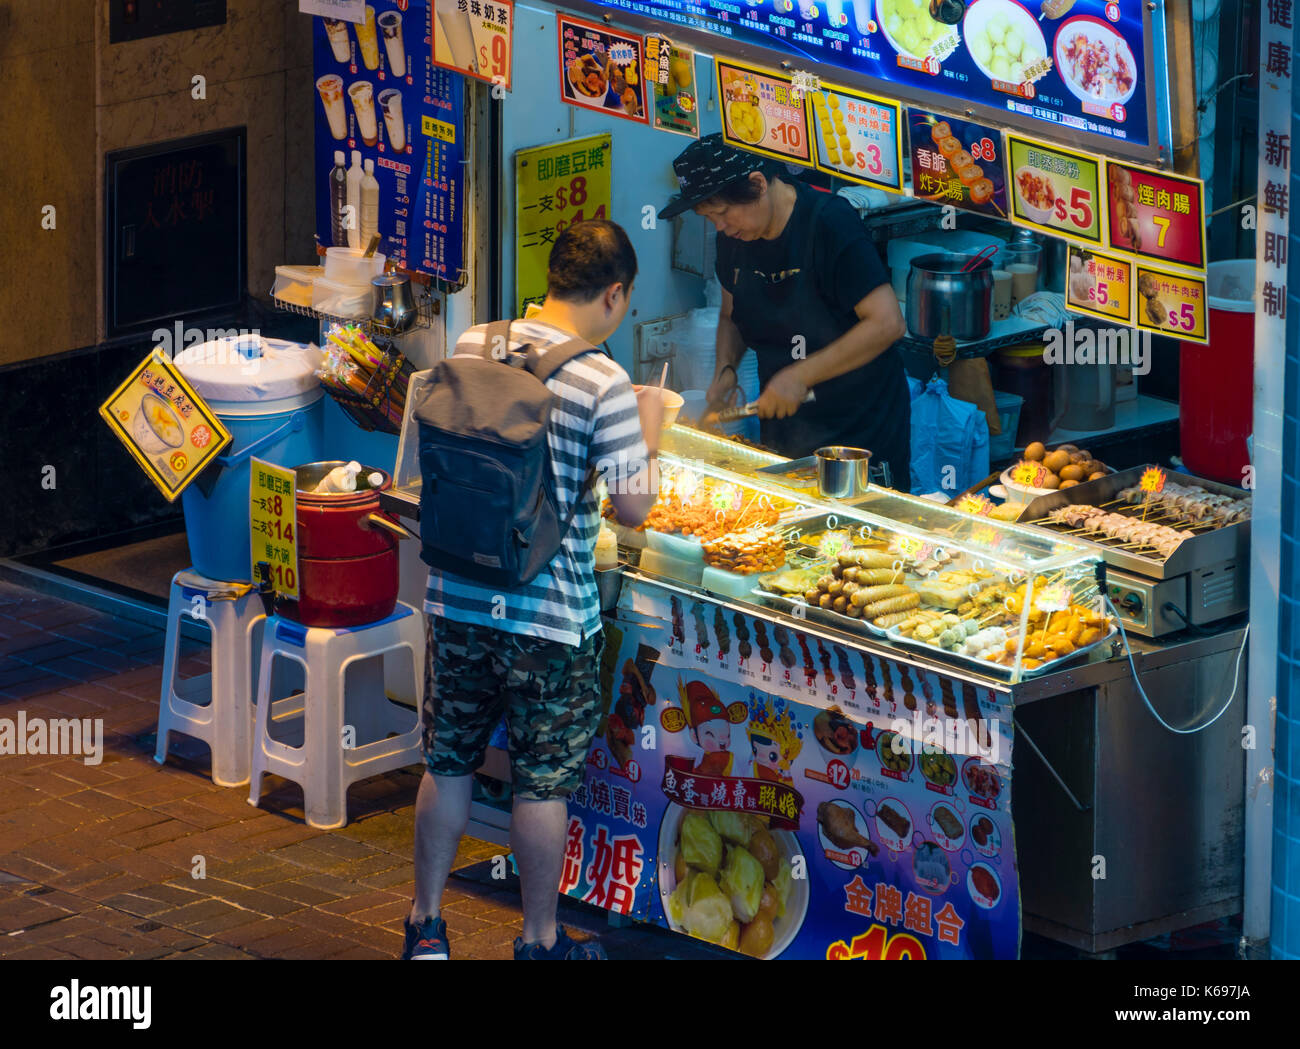 People buying street food at food stall in Hong Kong Stock Photo